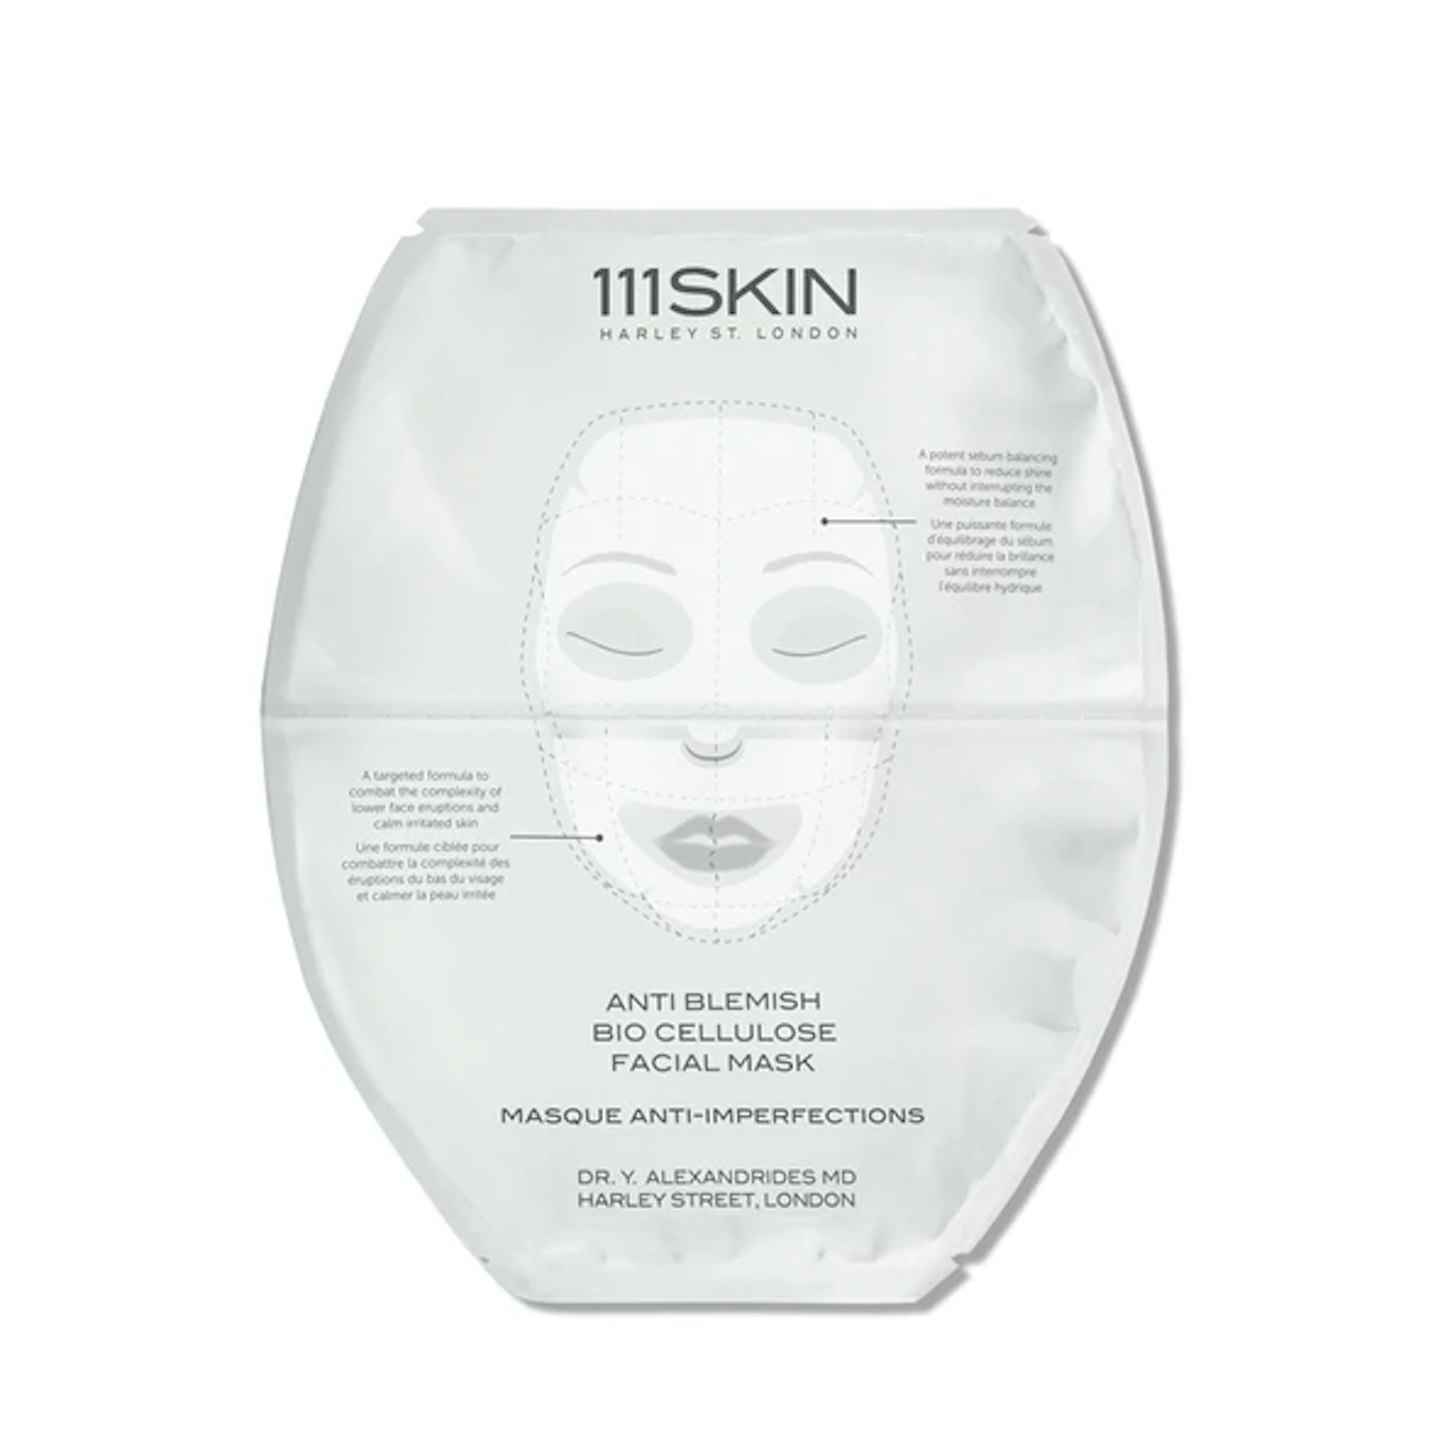 111 Skin, Anti Blemish Bio Cellulose Facial Mask, £20